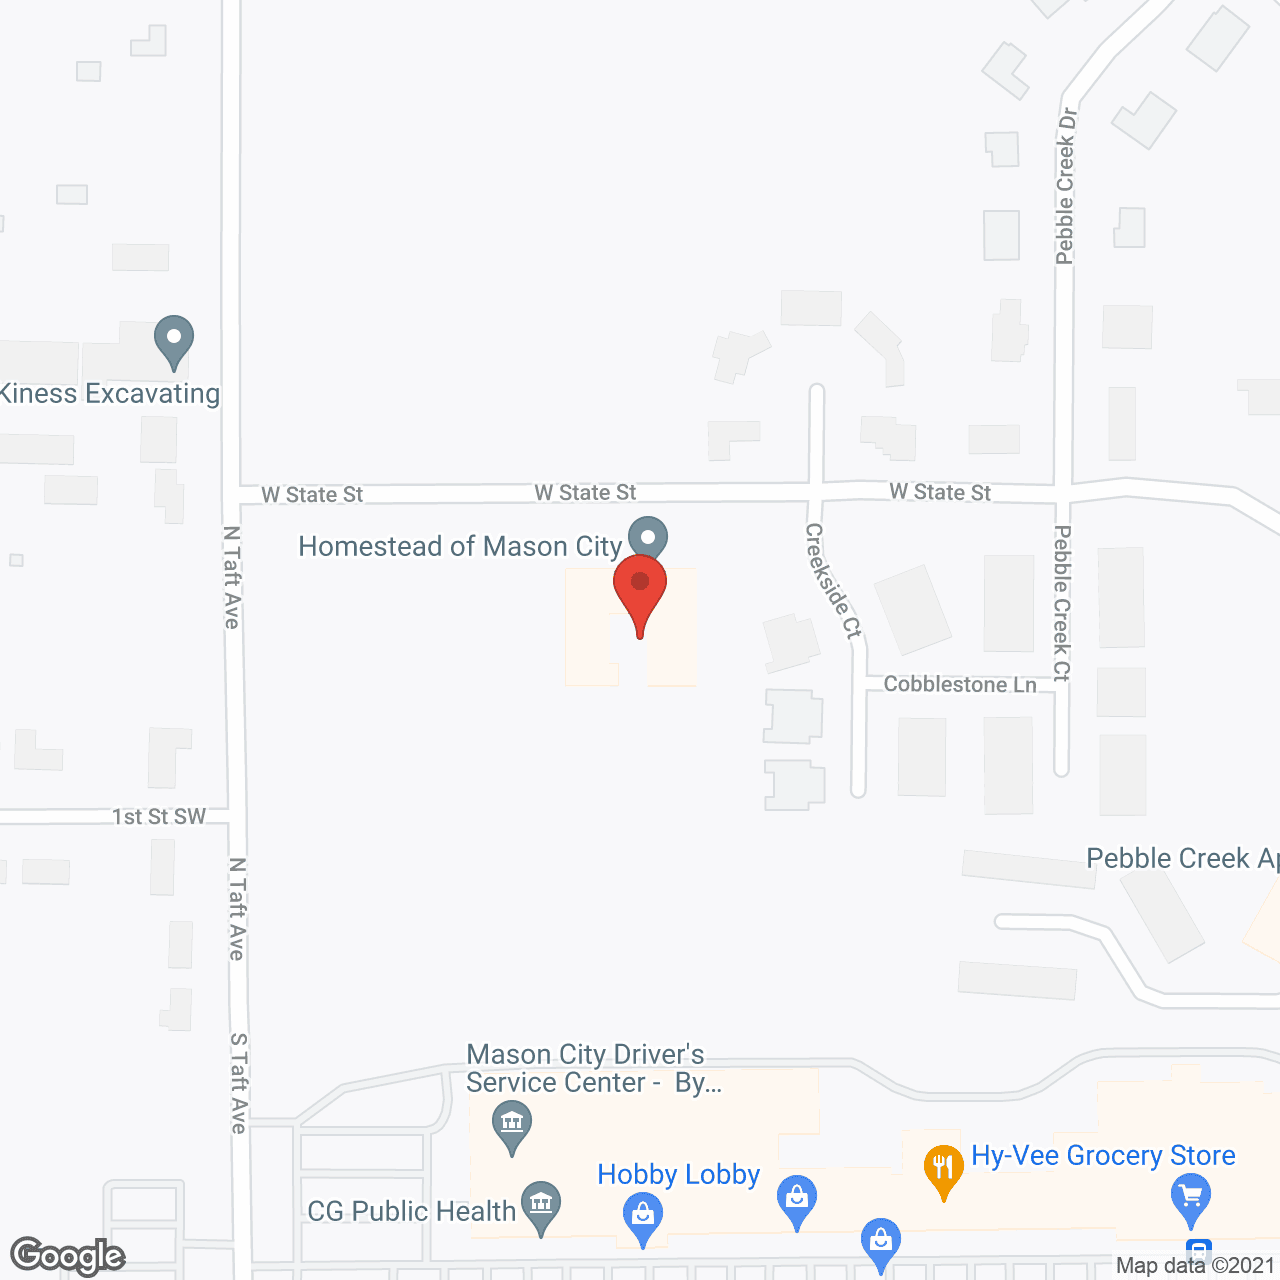 Homestead of Mason City in google map